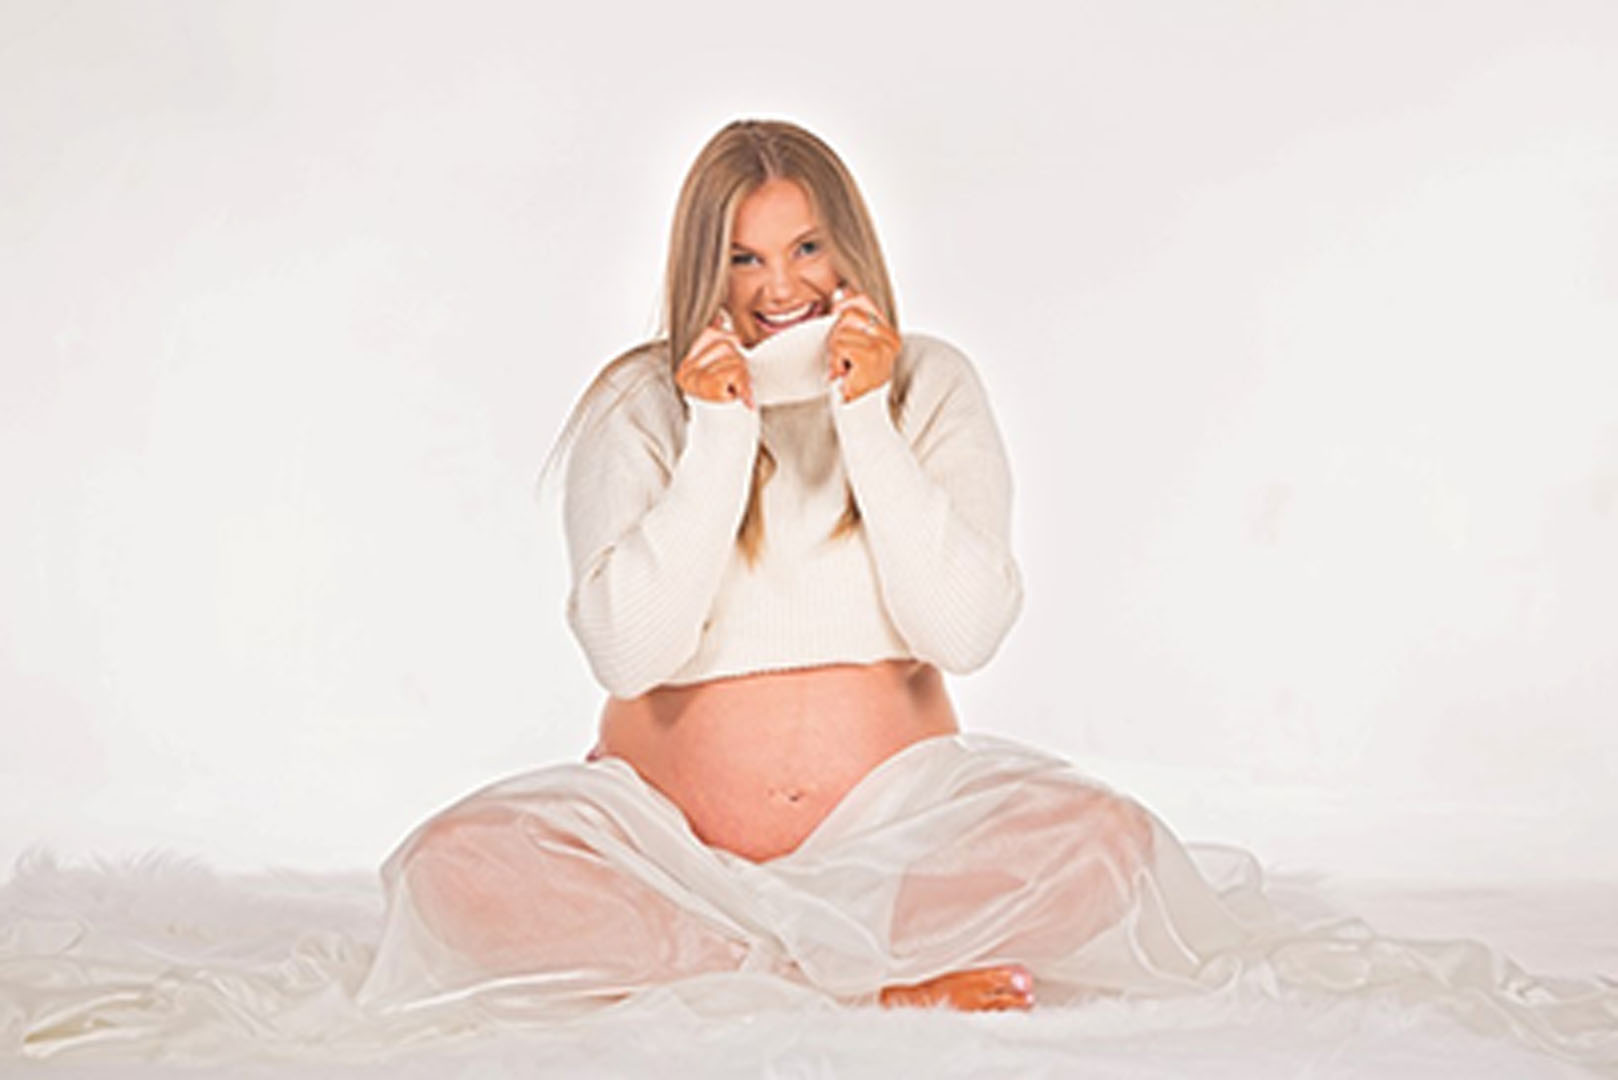 thanet_newborn_maternity_photography027